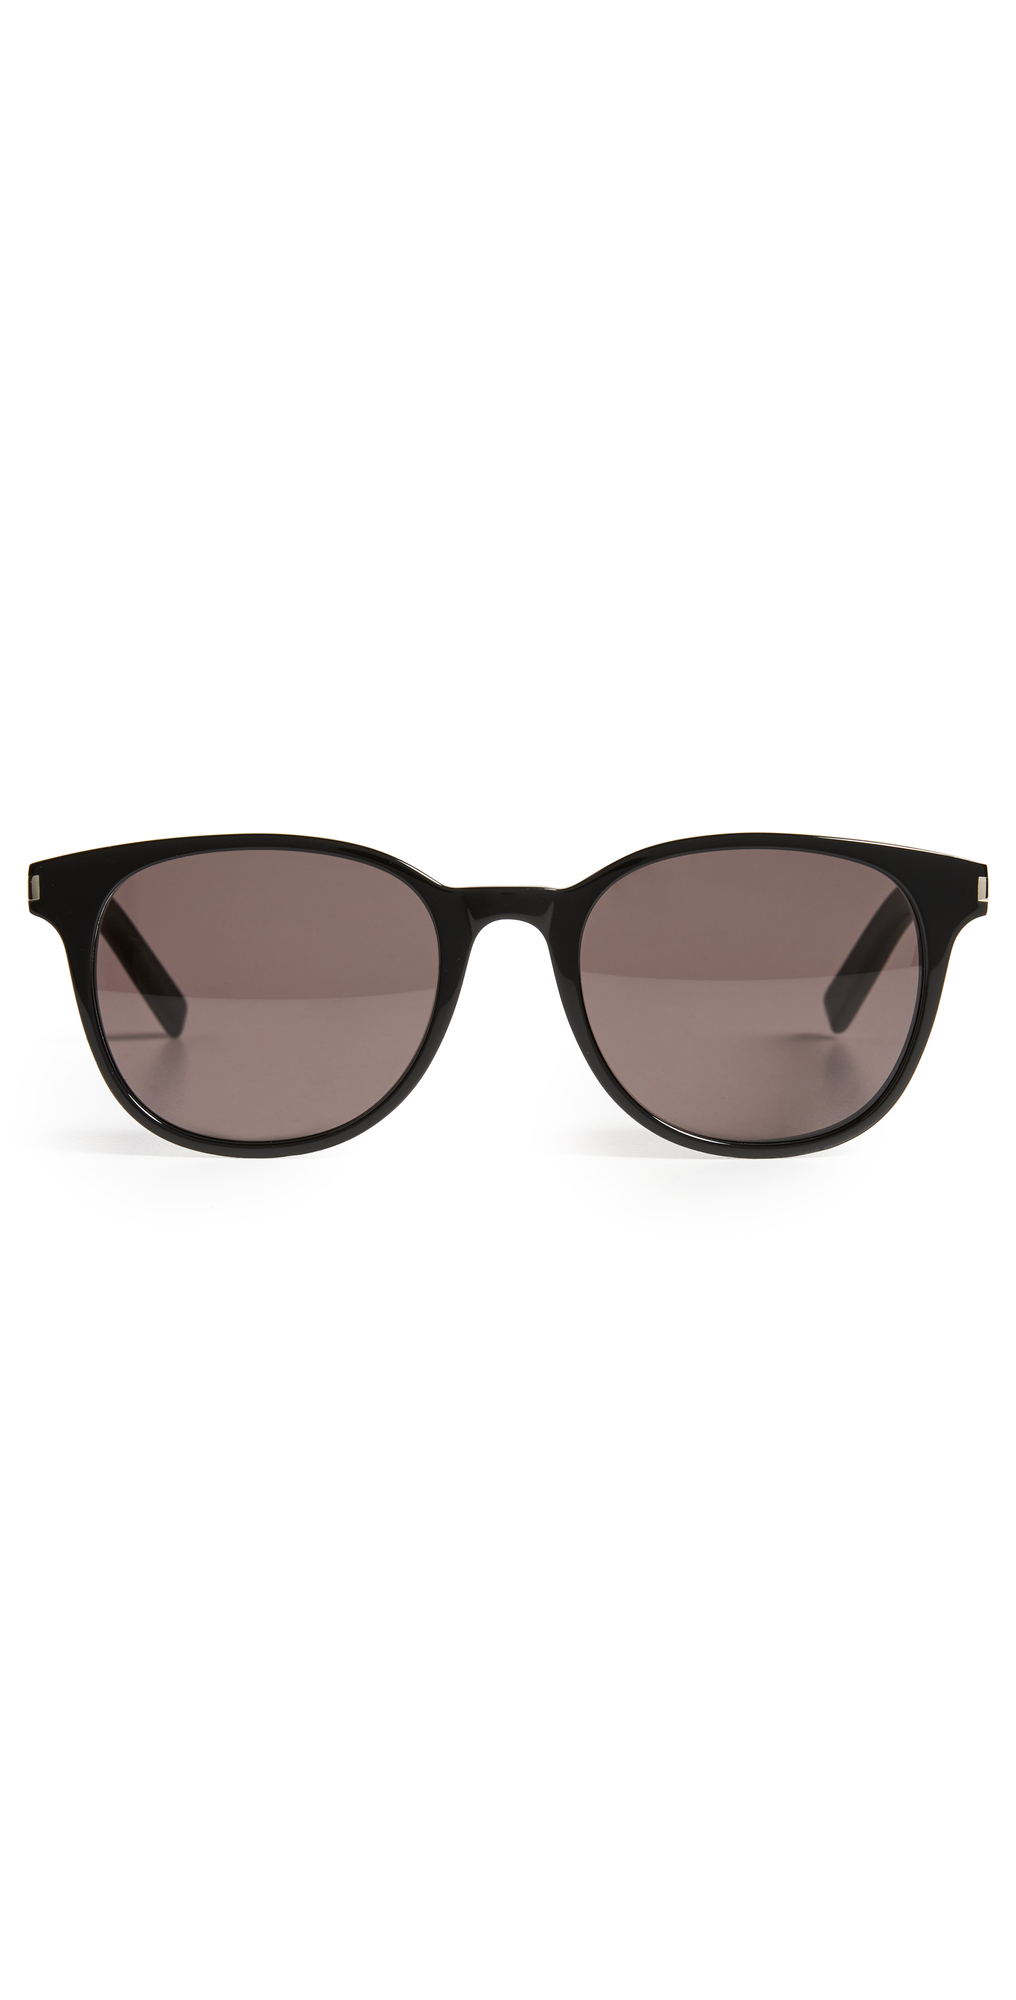 Saint Laurent Classic Corner Angle Round Sunglasses in black